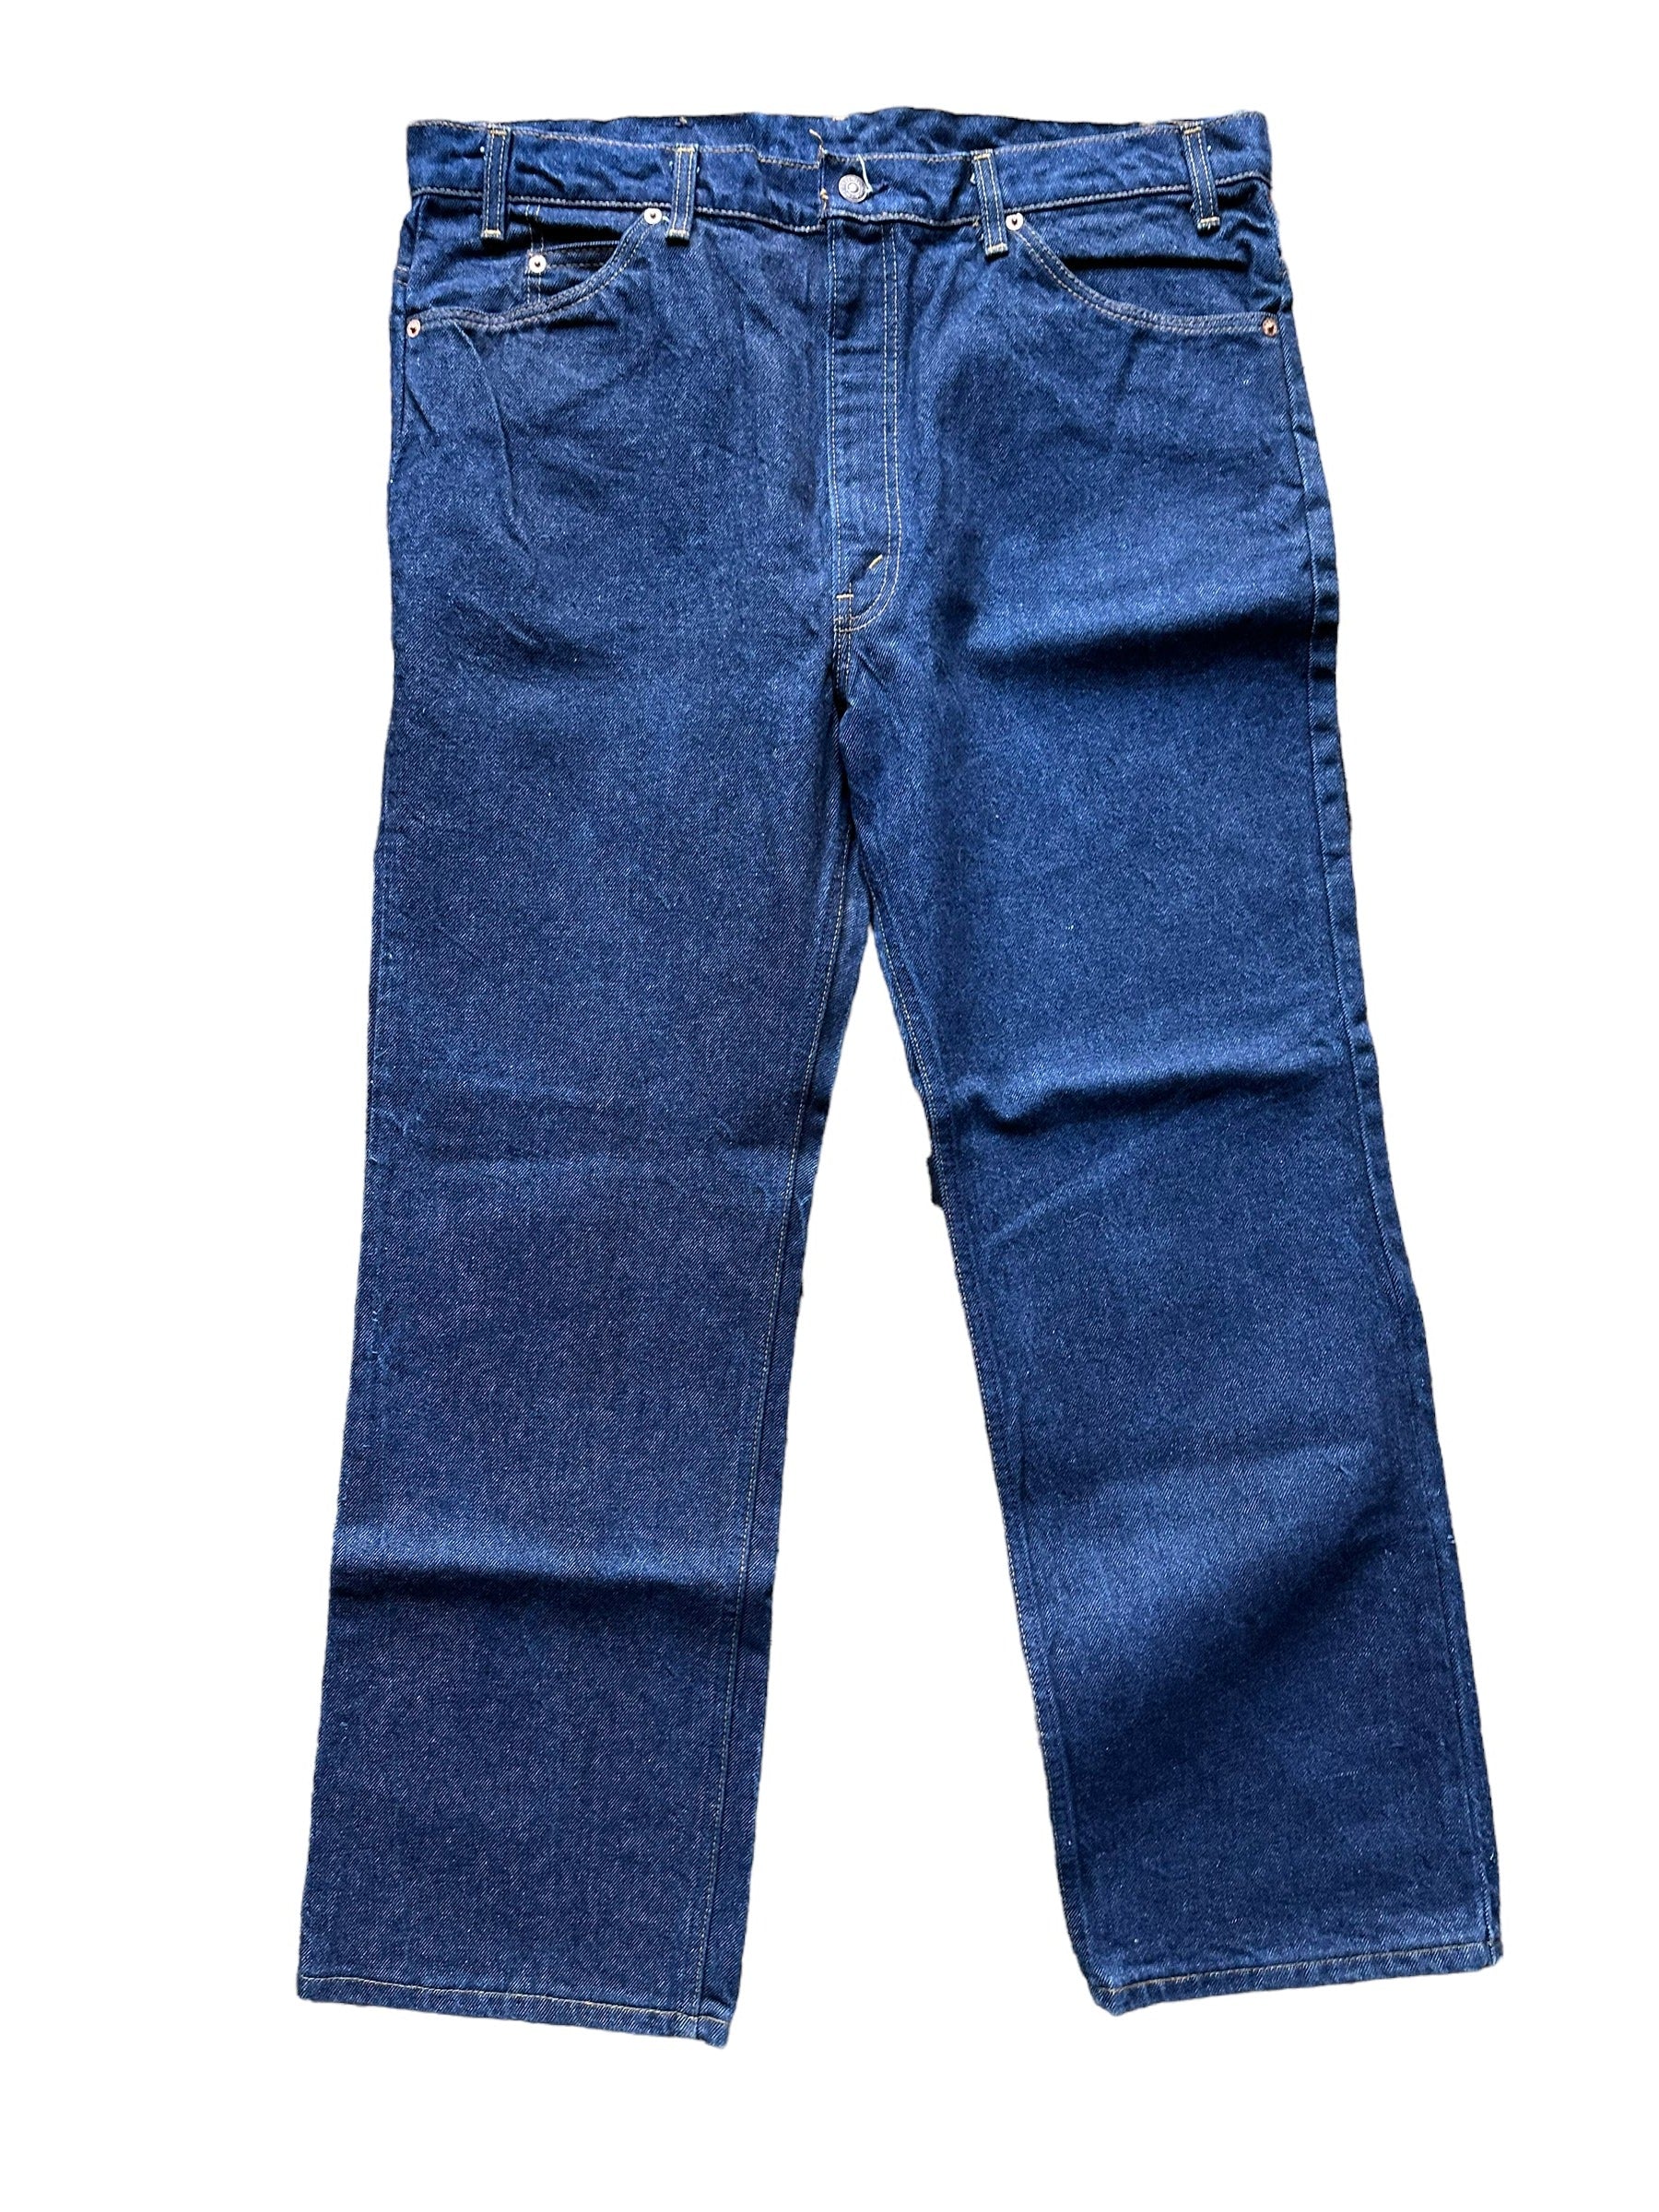 Full front view of Deadstock 90s USA Levi's 501 Black Jeans 26x33 | Seattle Deadstock Vintage Jeans | Barn Owl Vintage Denim